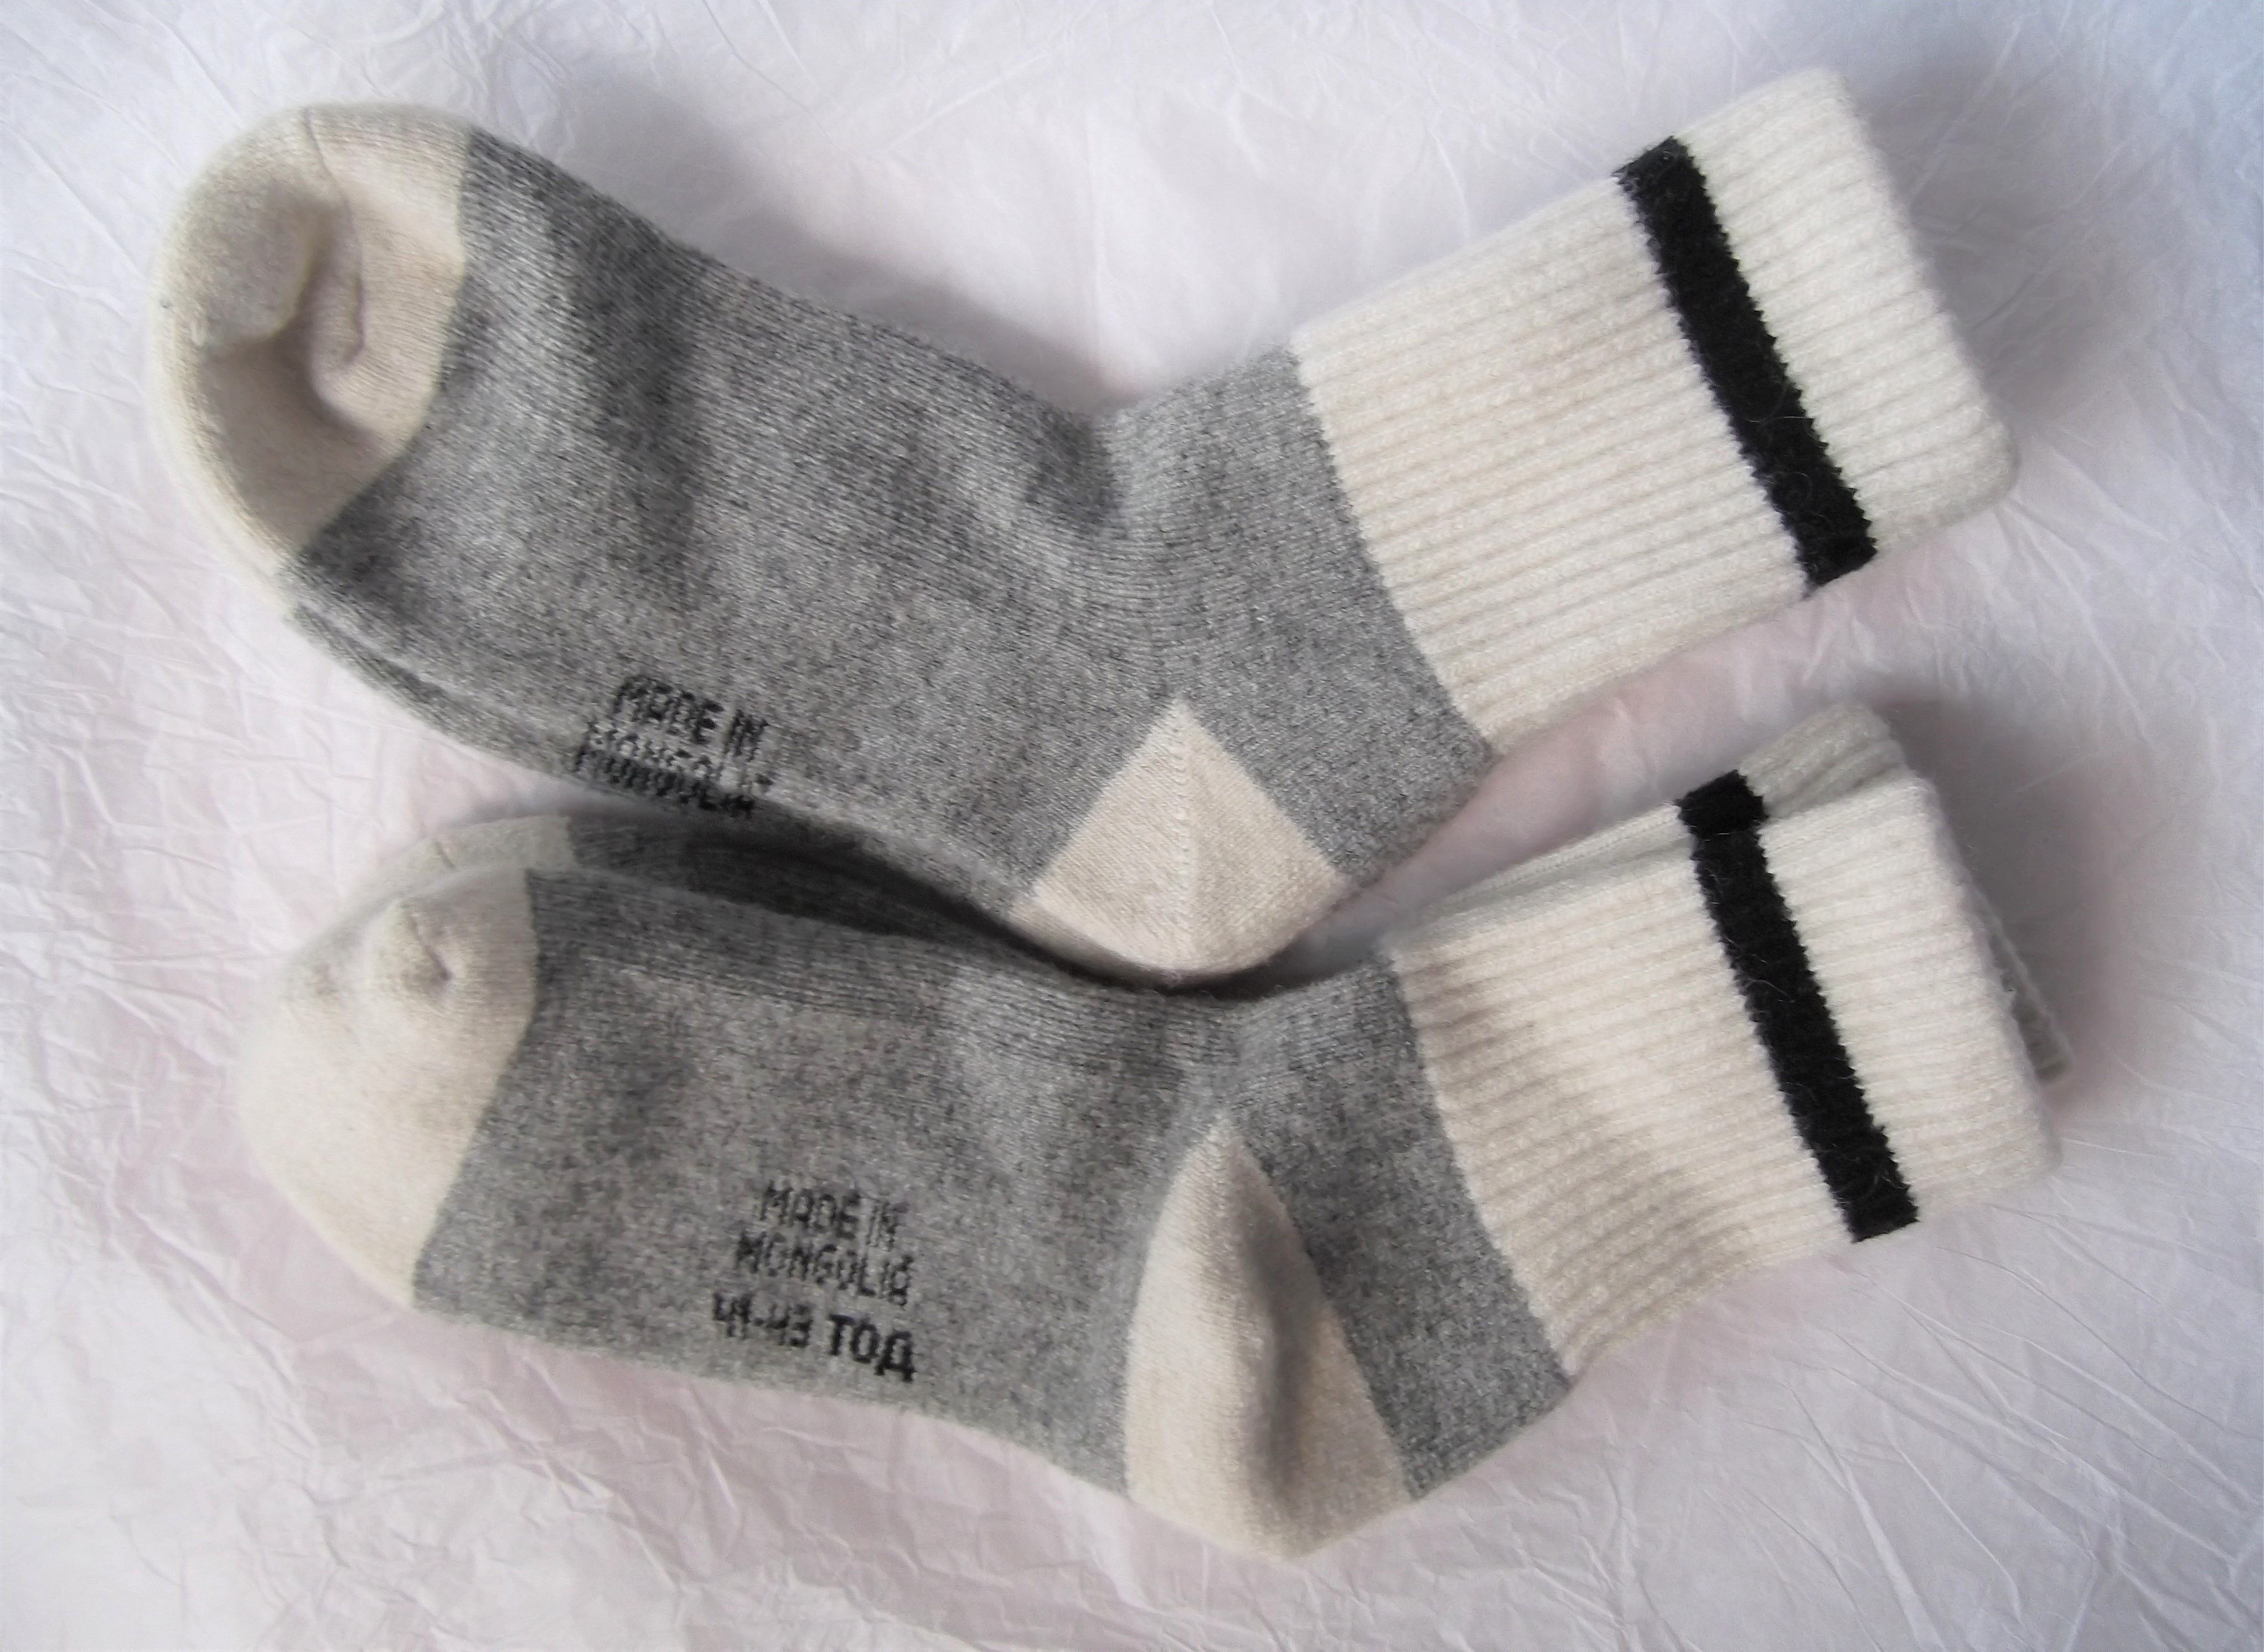 Sheep's Wool Socks 100% Natural Warm Handmade Casual All Sizes New